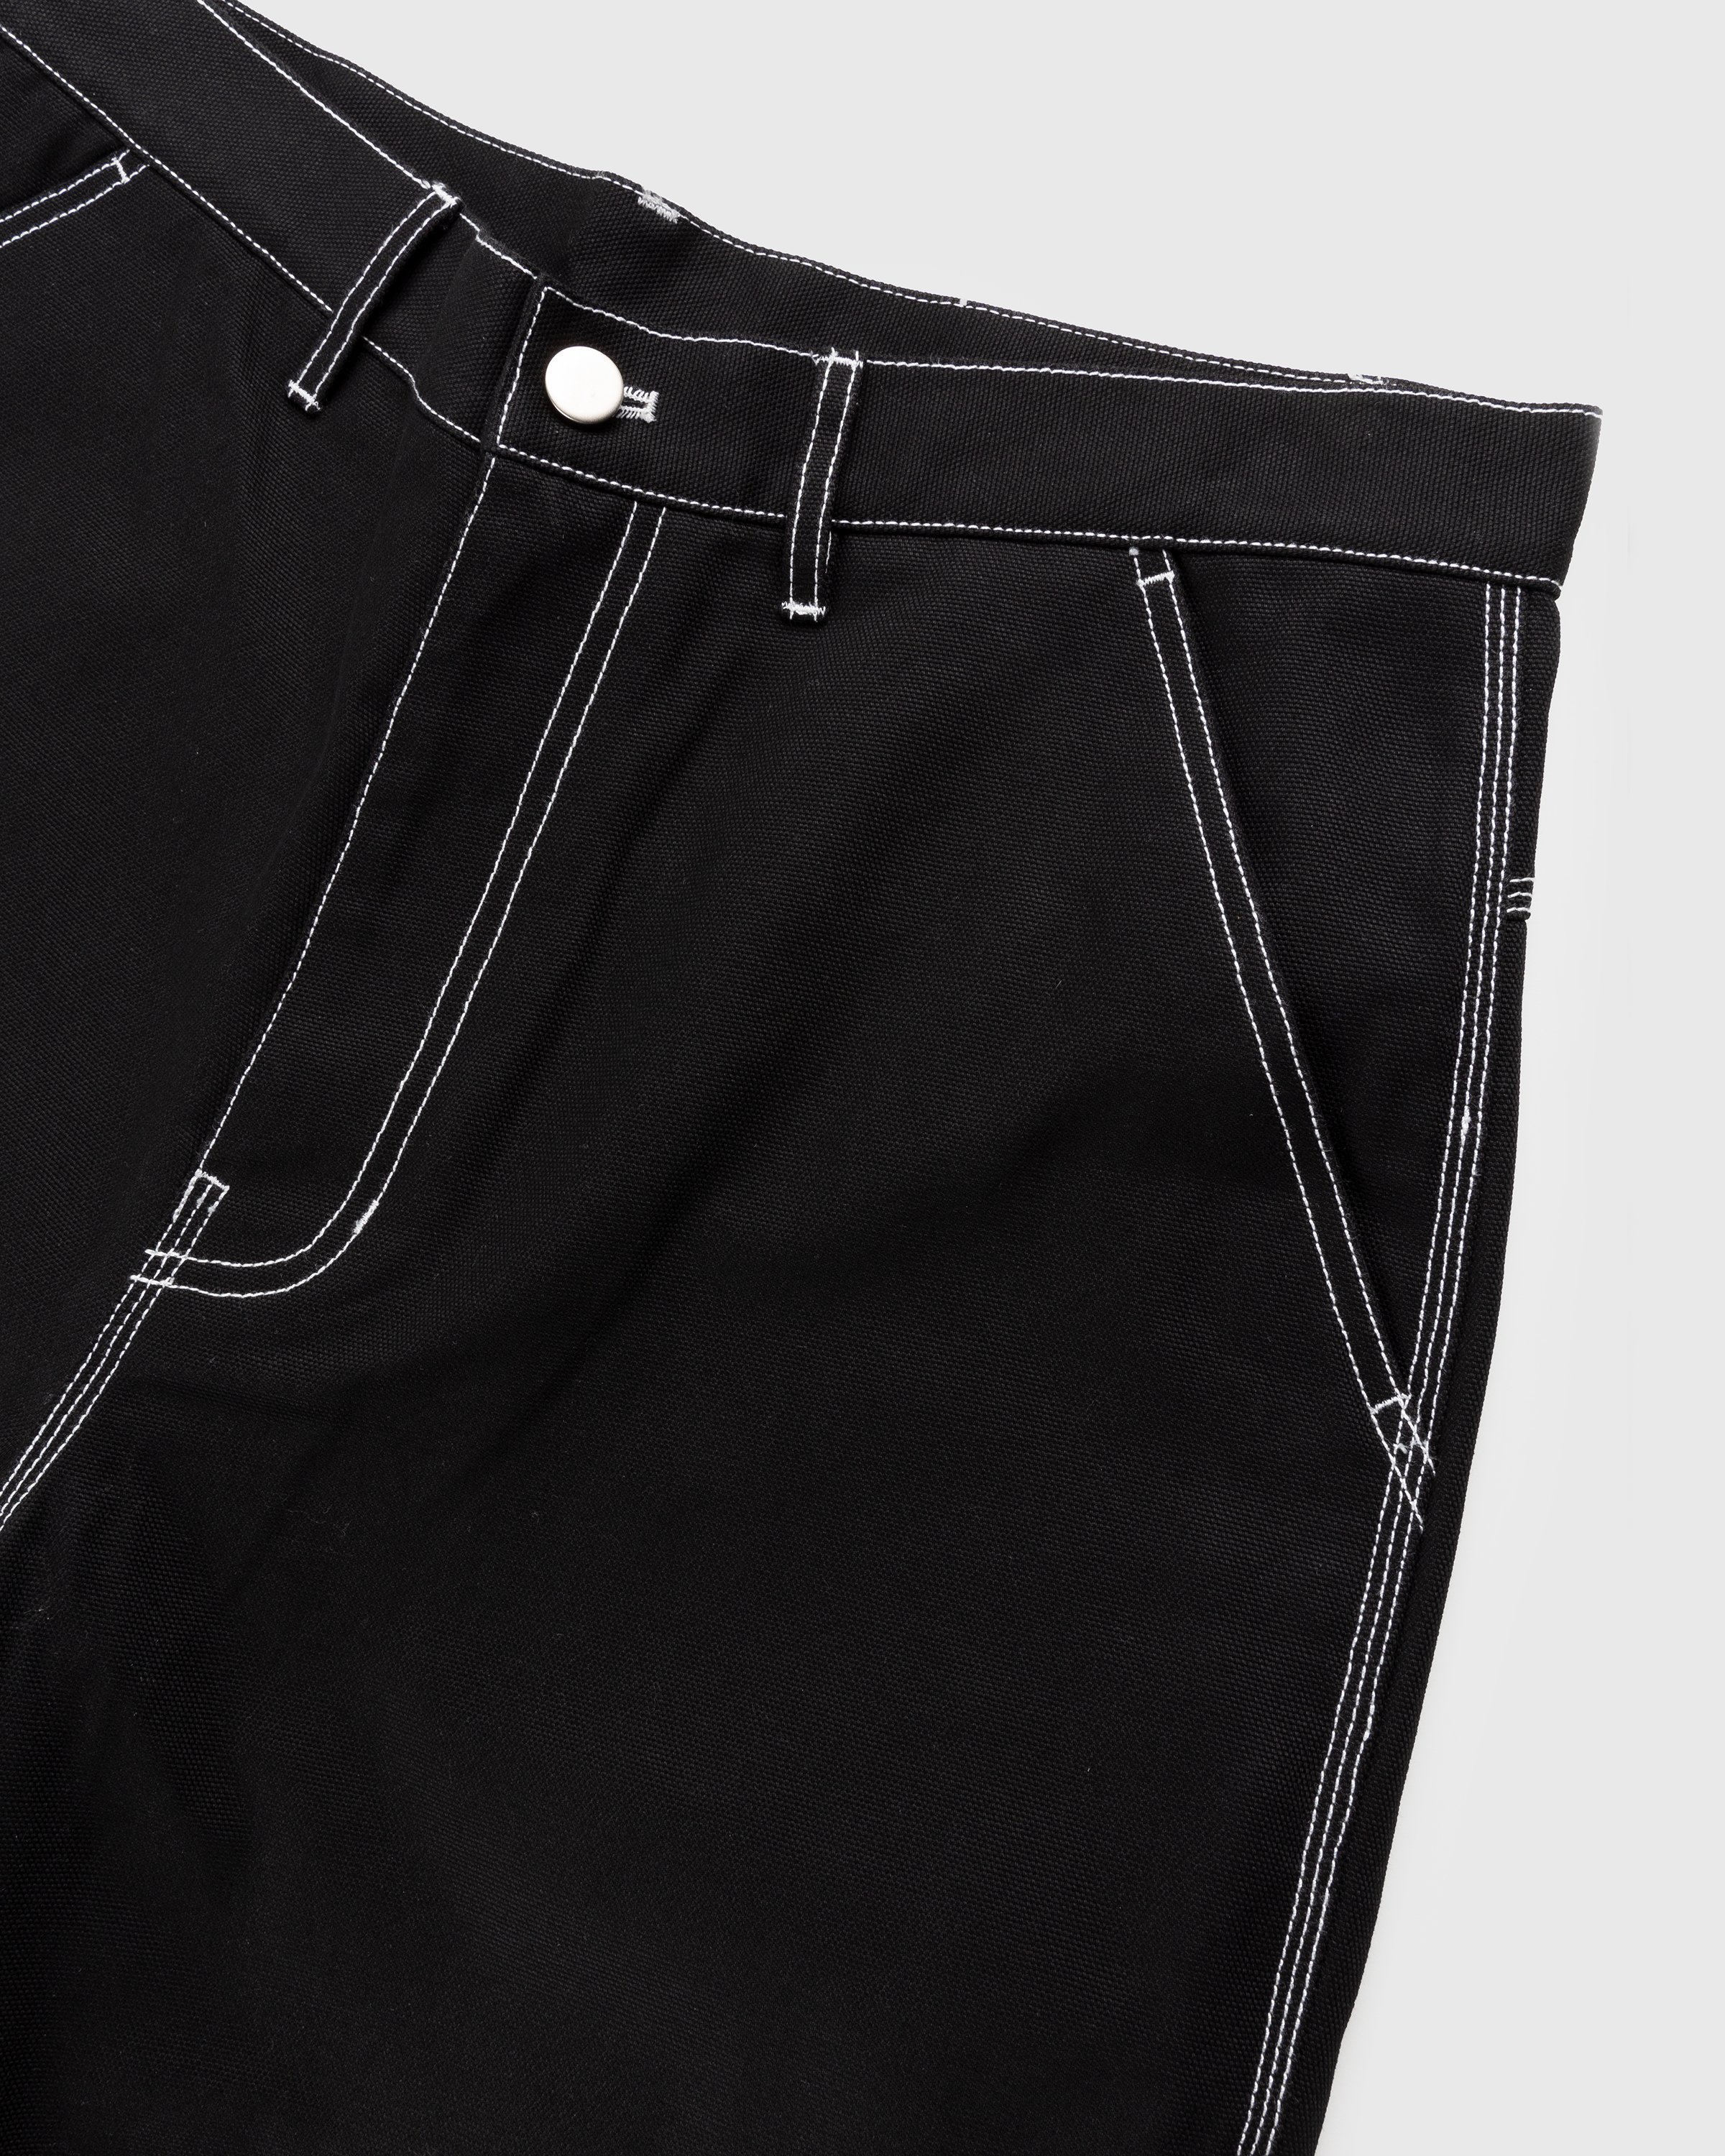 RUF x Highsnobiety - Cotton Work Pants Black - Clothing - Black - Image 3